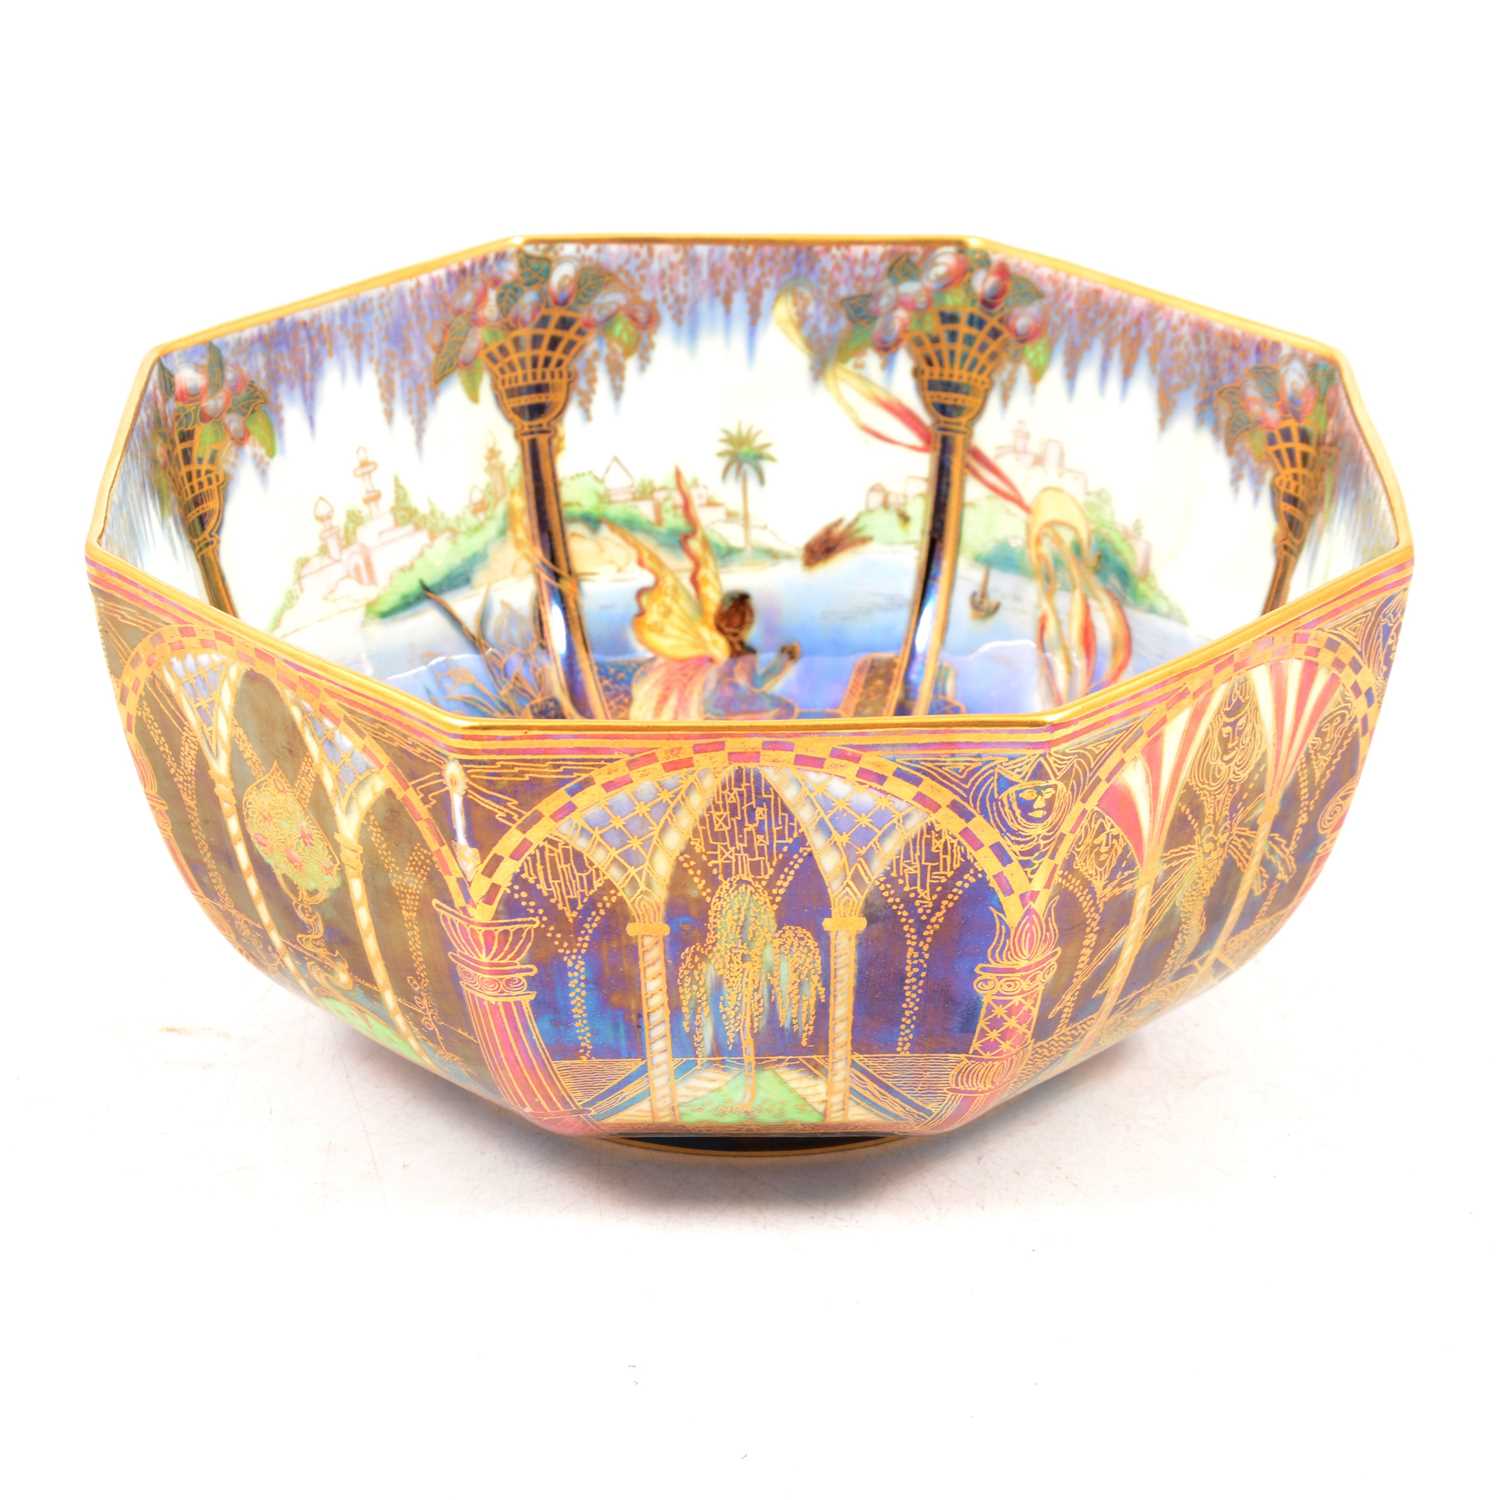 535 - Daisy Makeig-Jones for Wedgwood, a Fairyland lustre octagonal bowl